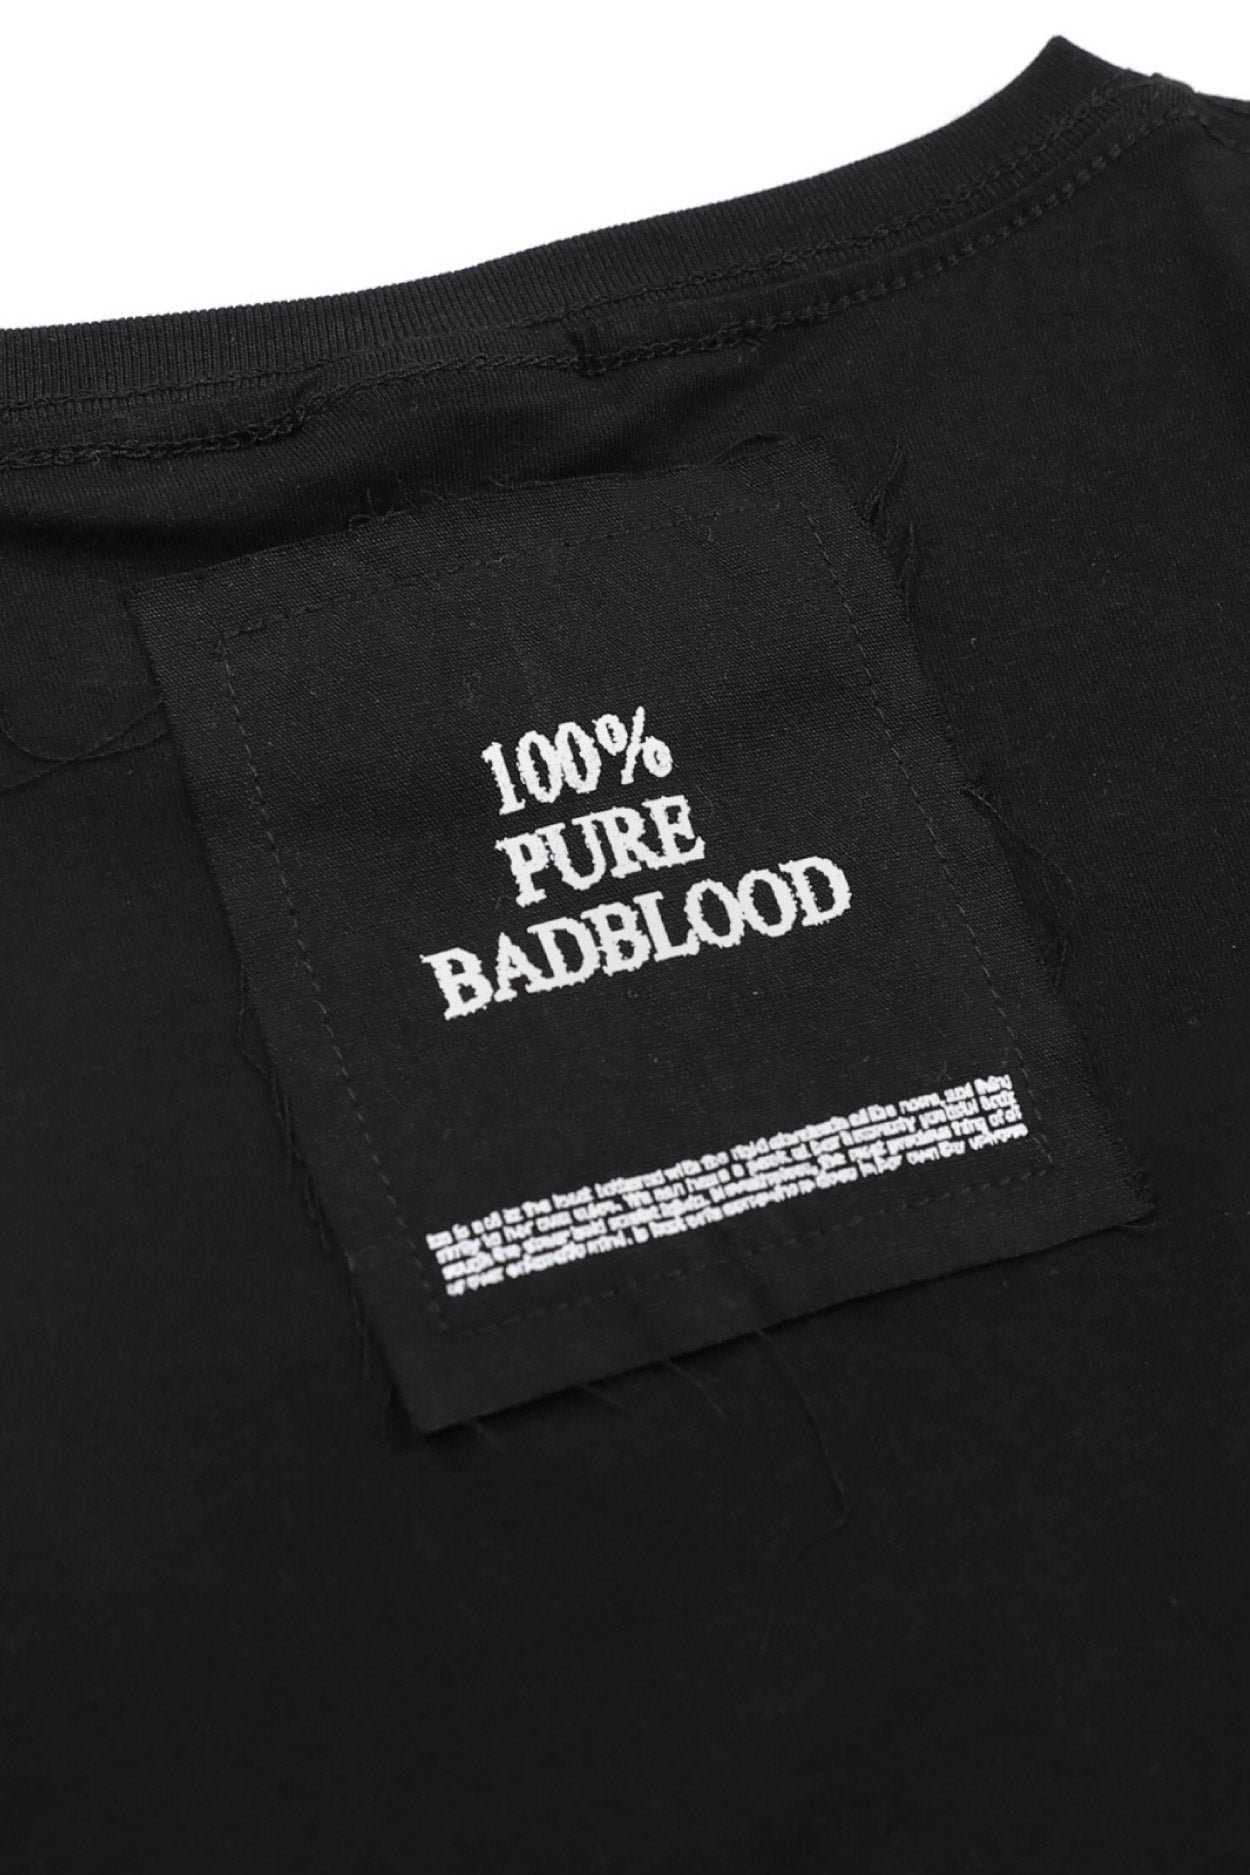 Badblood Kill Them short sleeve slim fit black